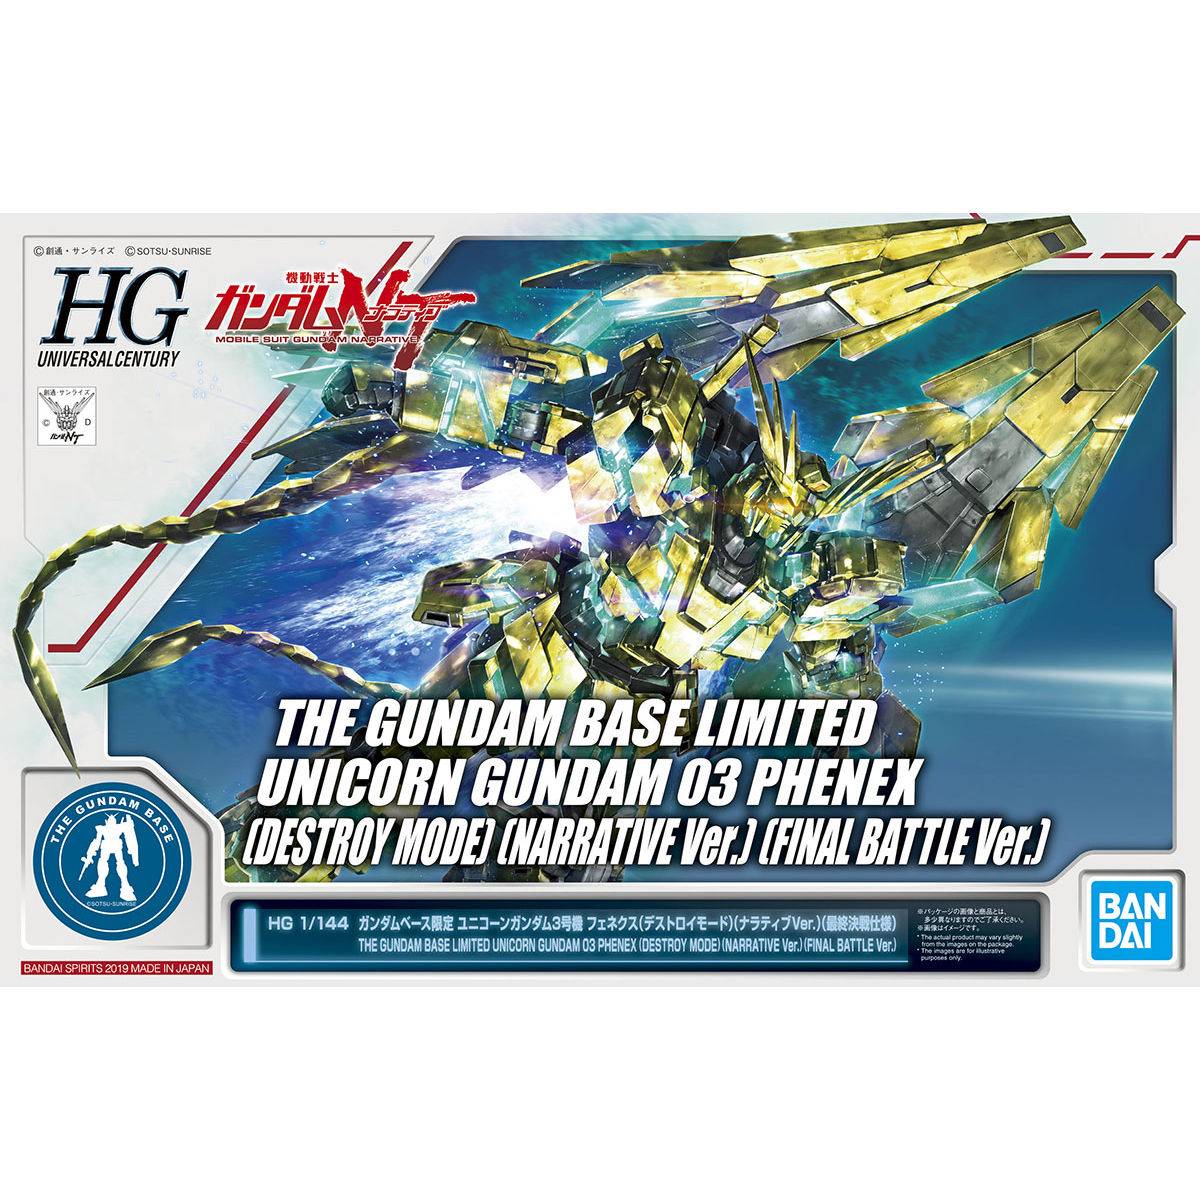 HG 1/144 Gundam Base Limited Unicorn Gundam Unit 3 Phenex (Destroy Mode) (Narrative Ver.) (Final Battle Specification)